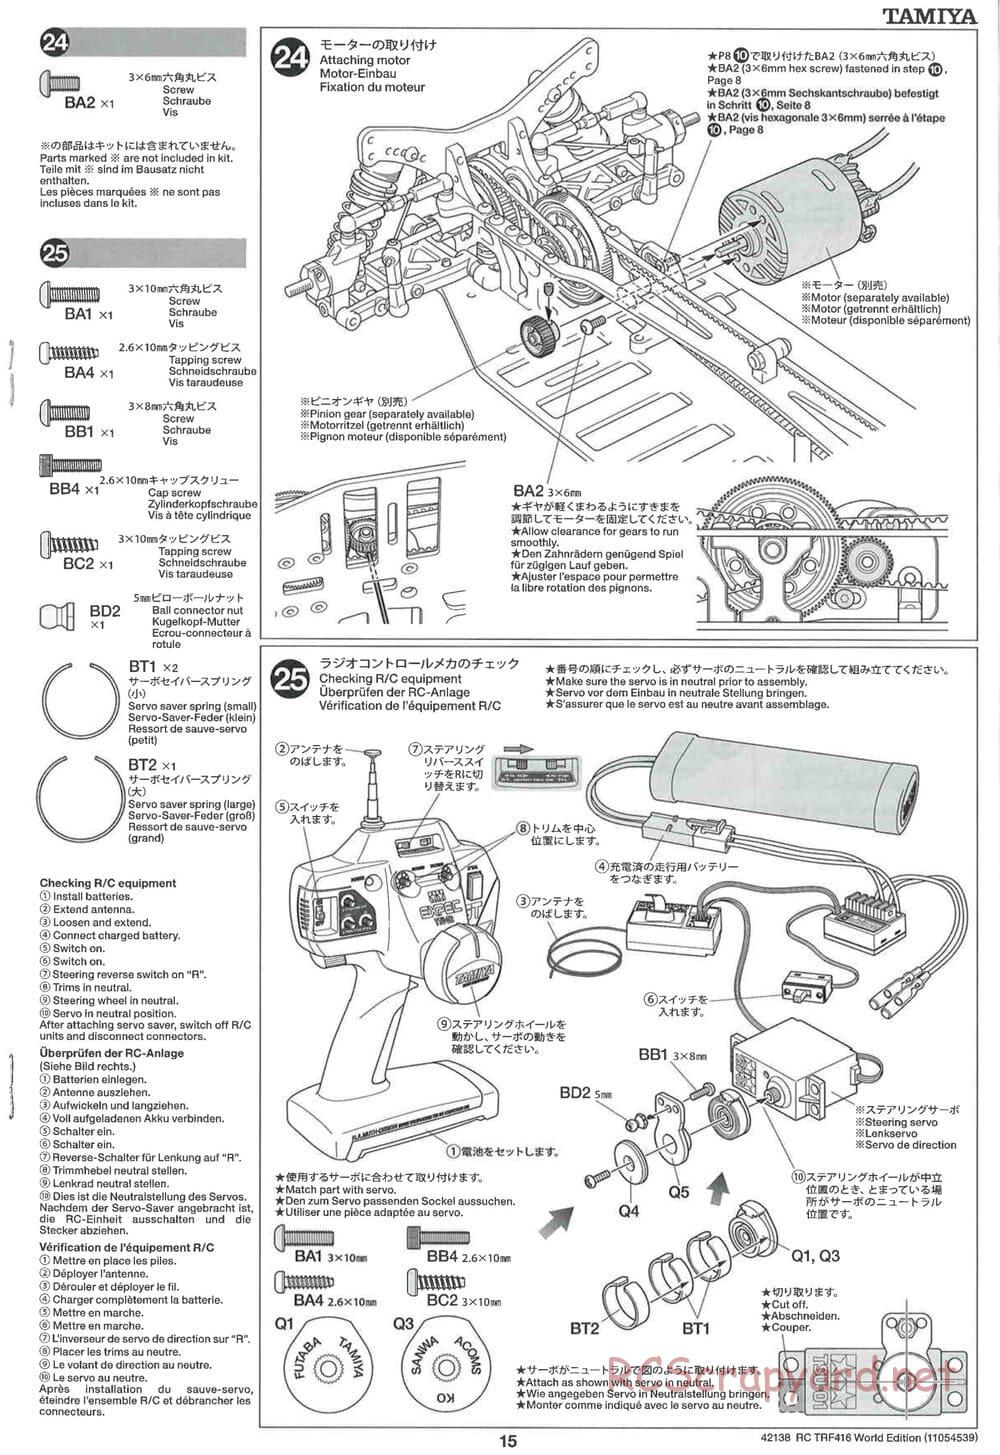 Tamiya - TRF416 World Edition Chassis - Manual - Page 15